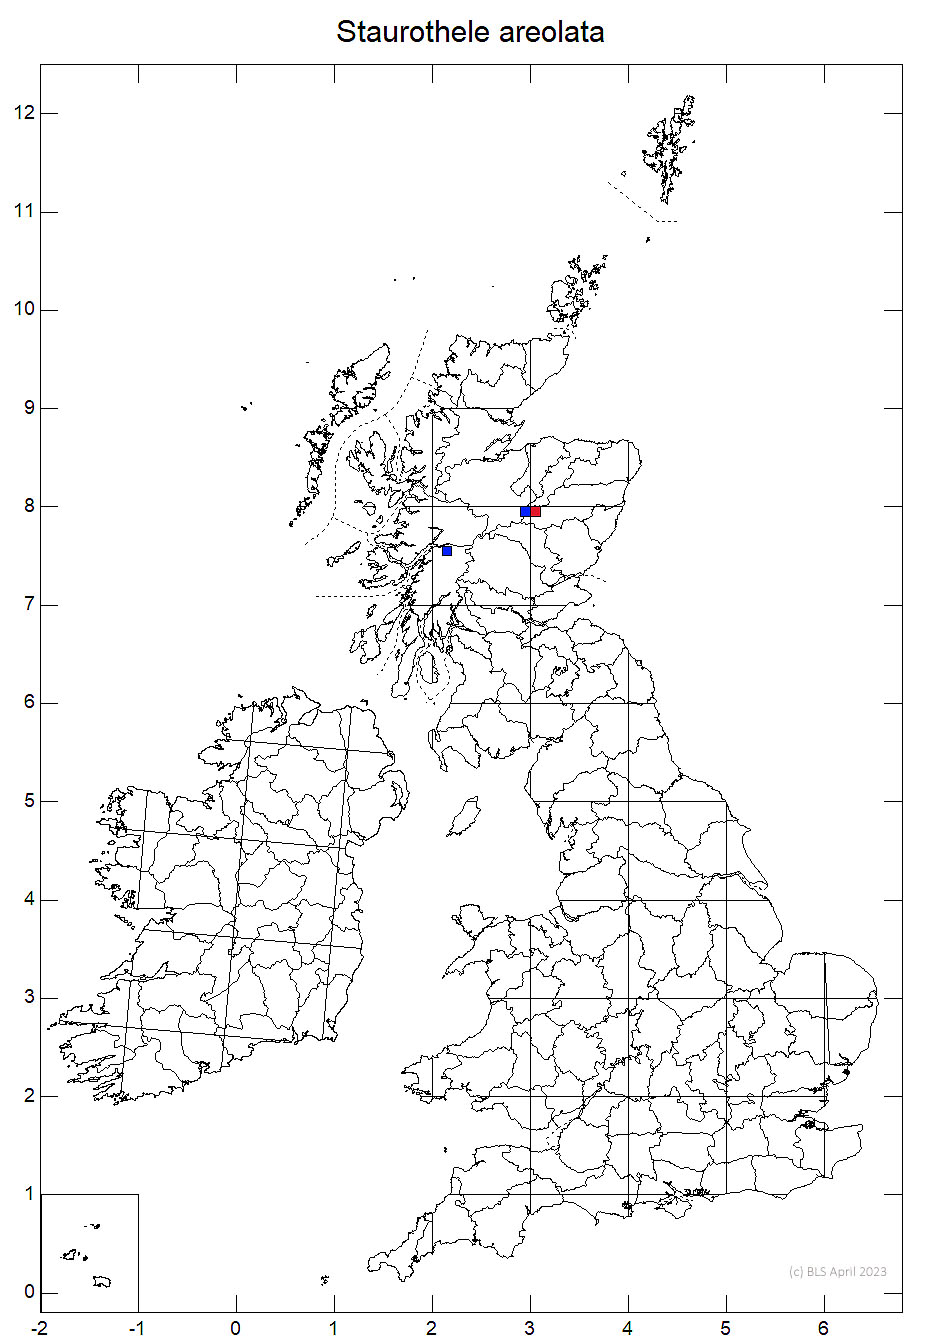 Staurothele areolata 10km sq distribution map